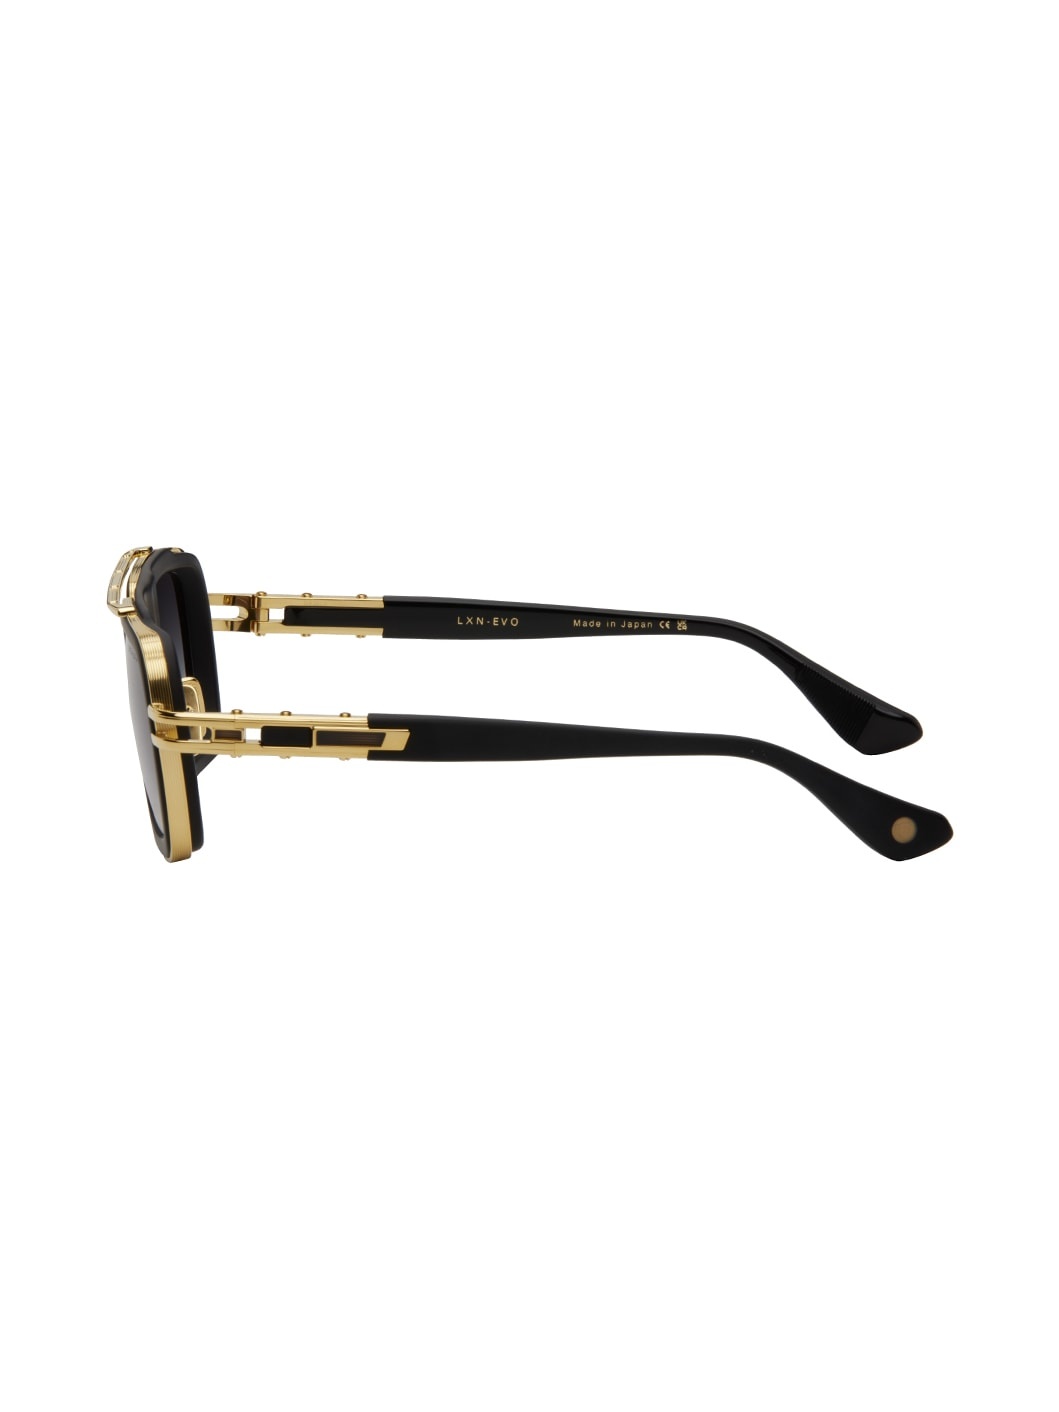 Black & Gold LXN-EVO Sunglasses - 3